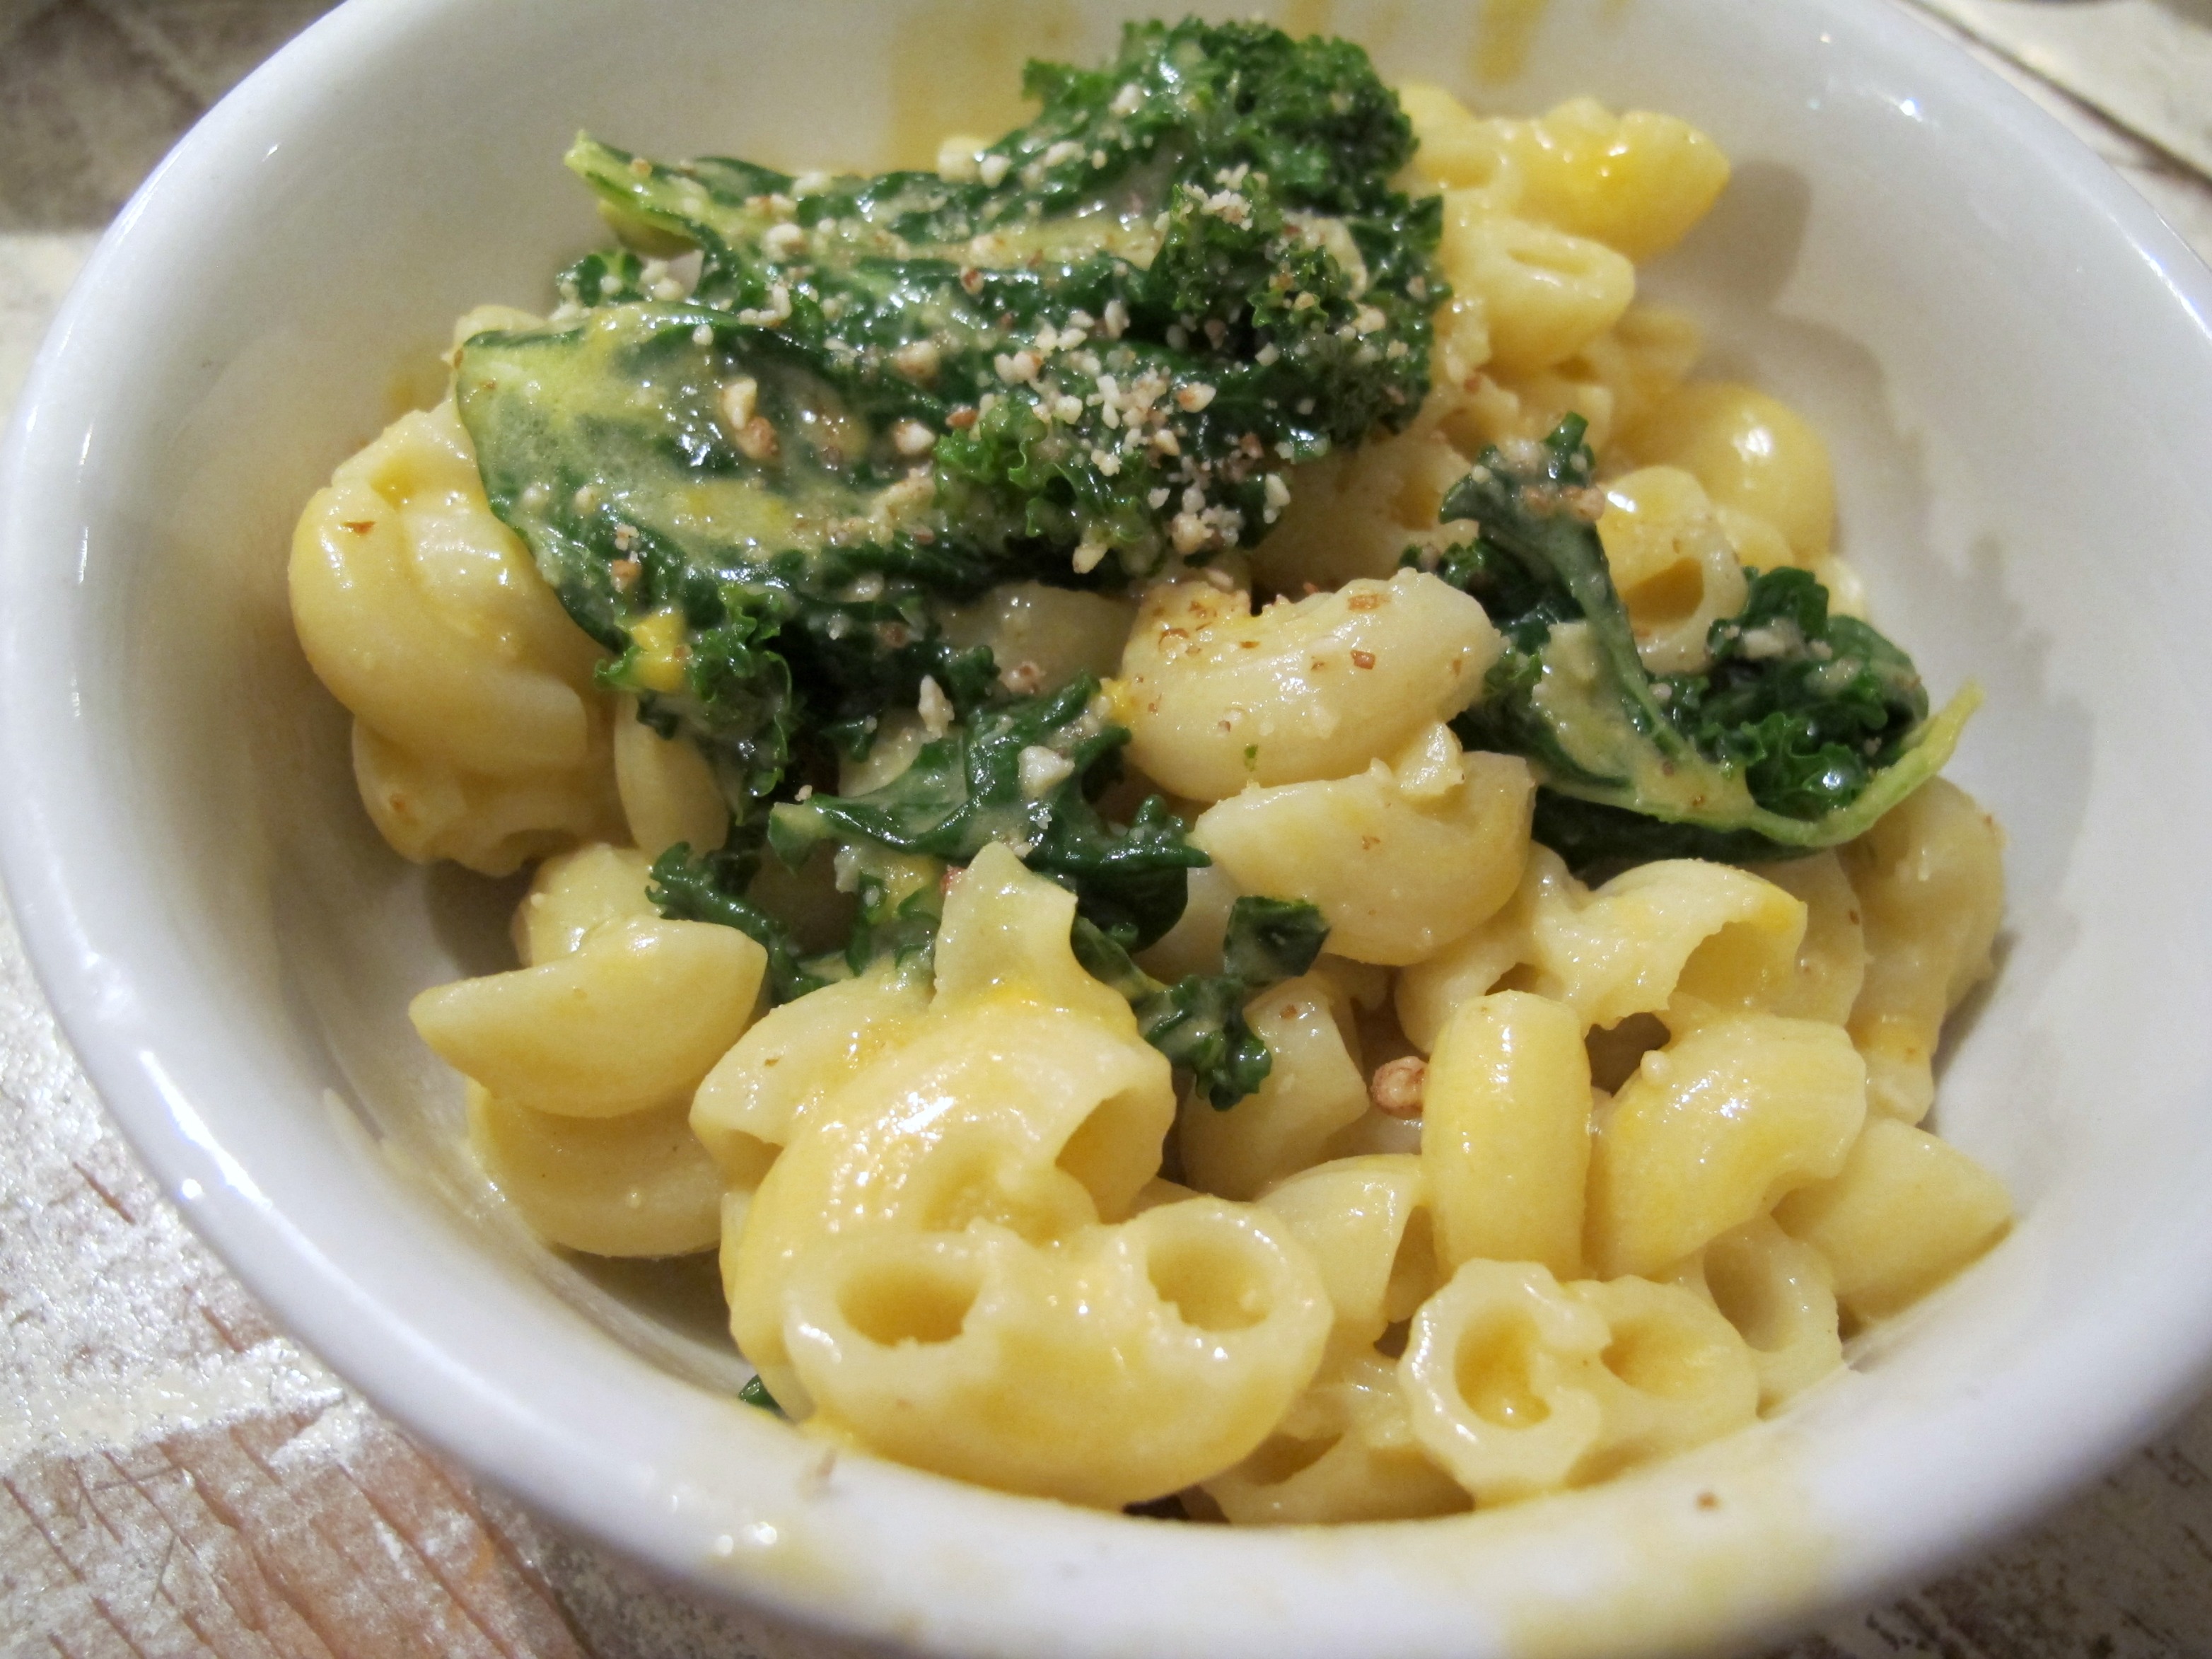 Vegan, gluten-free macaroni and cheese from the kids' menu at Harlow in Portland, Oregon | vegetarianPDX